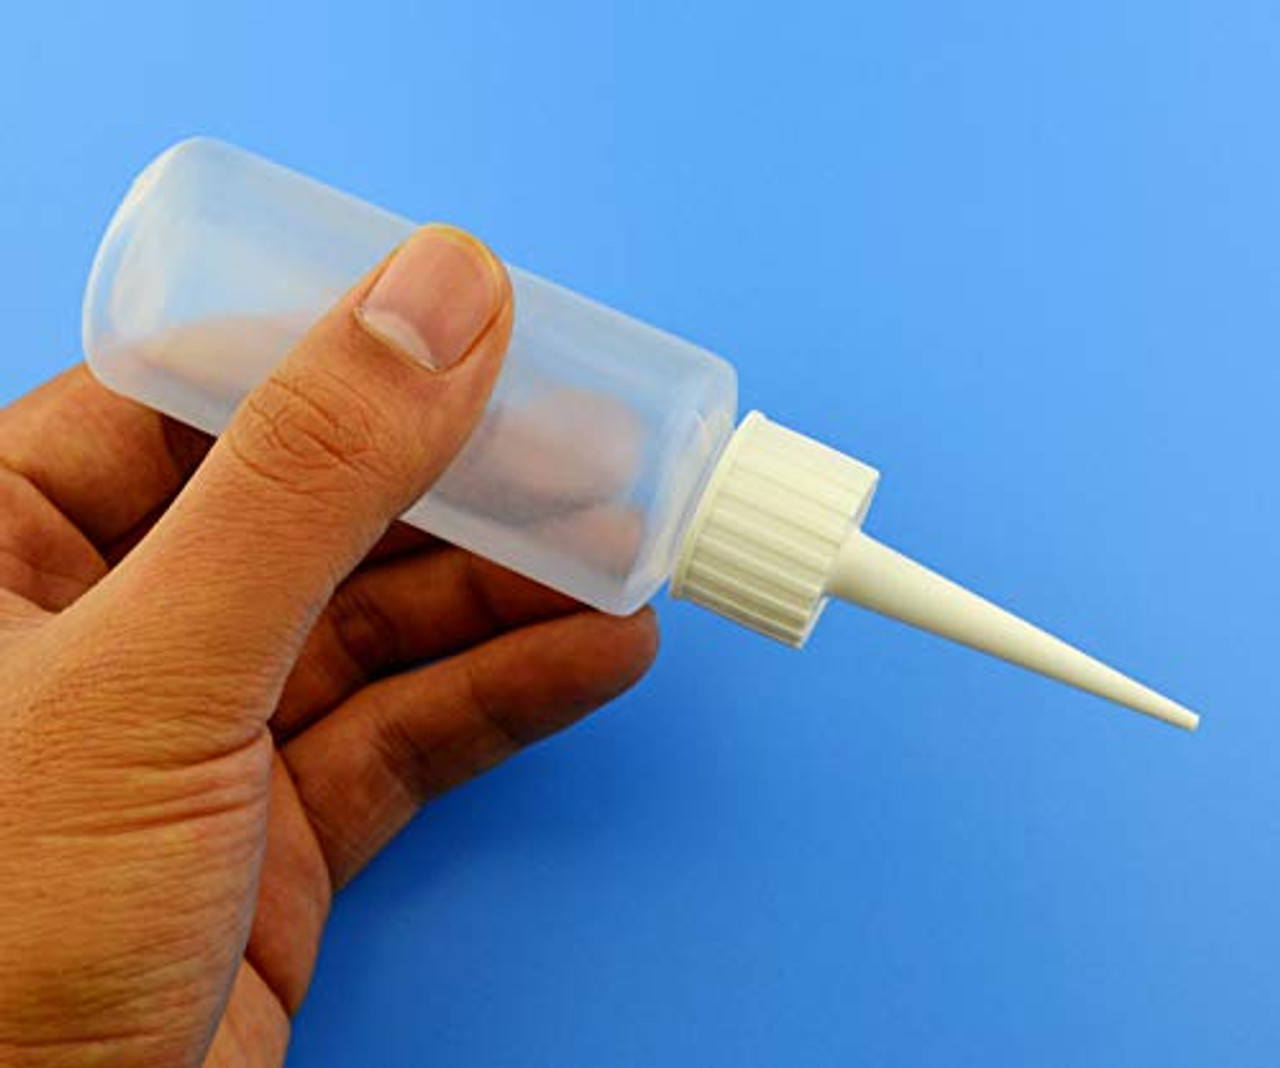 6Pcs Syringe Bottle With 15Pcs Dispensing Needles And 12Pcs Cap (30ml+50ml)